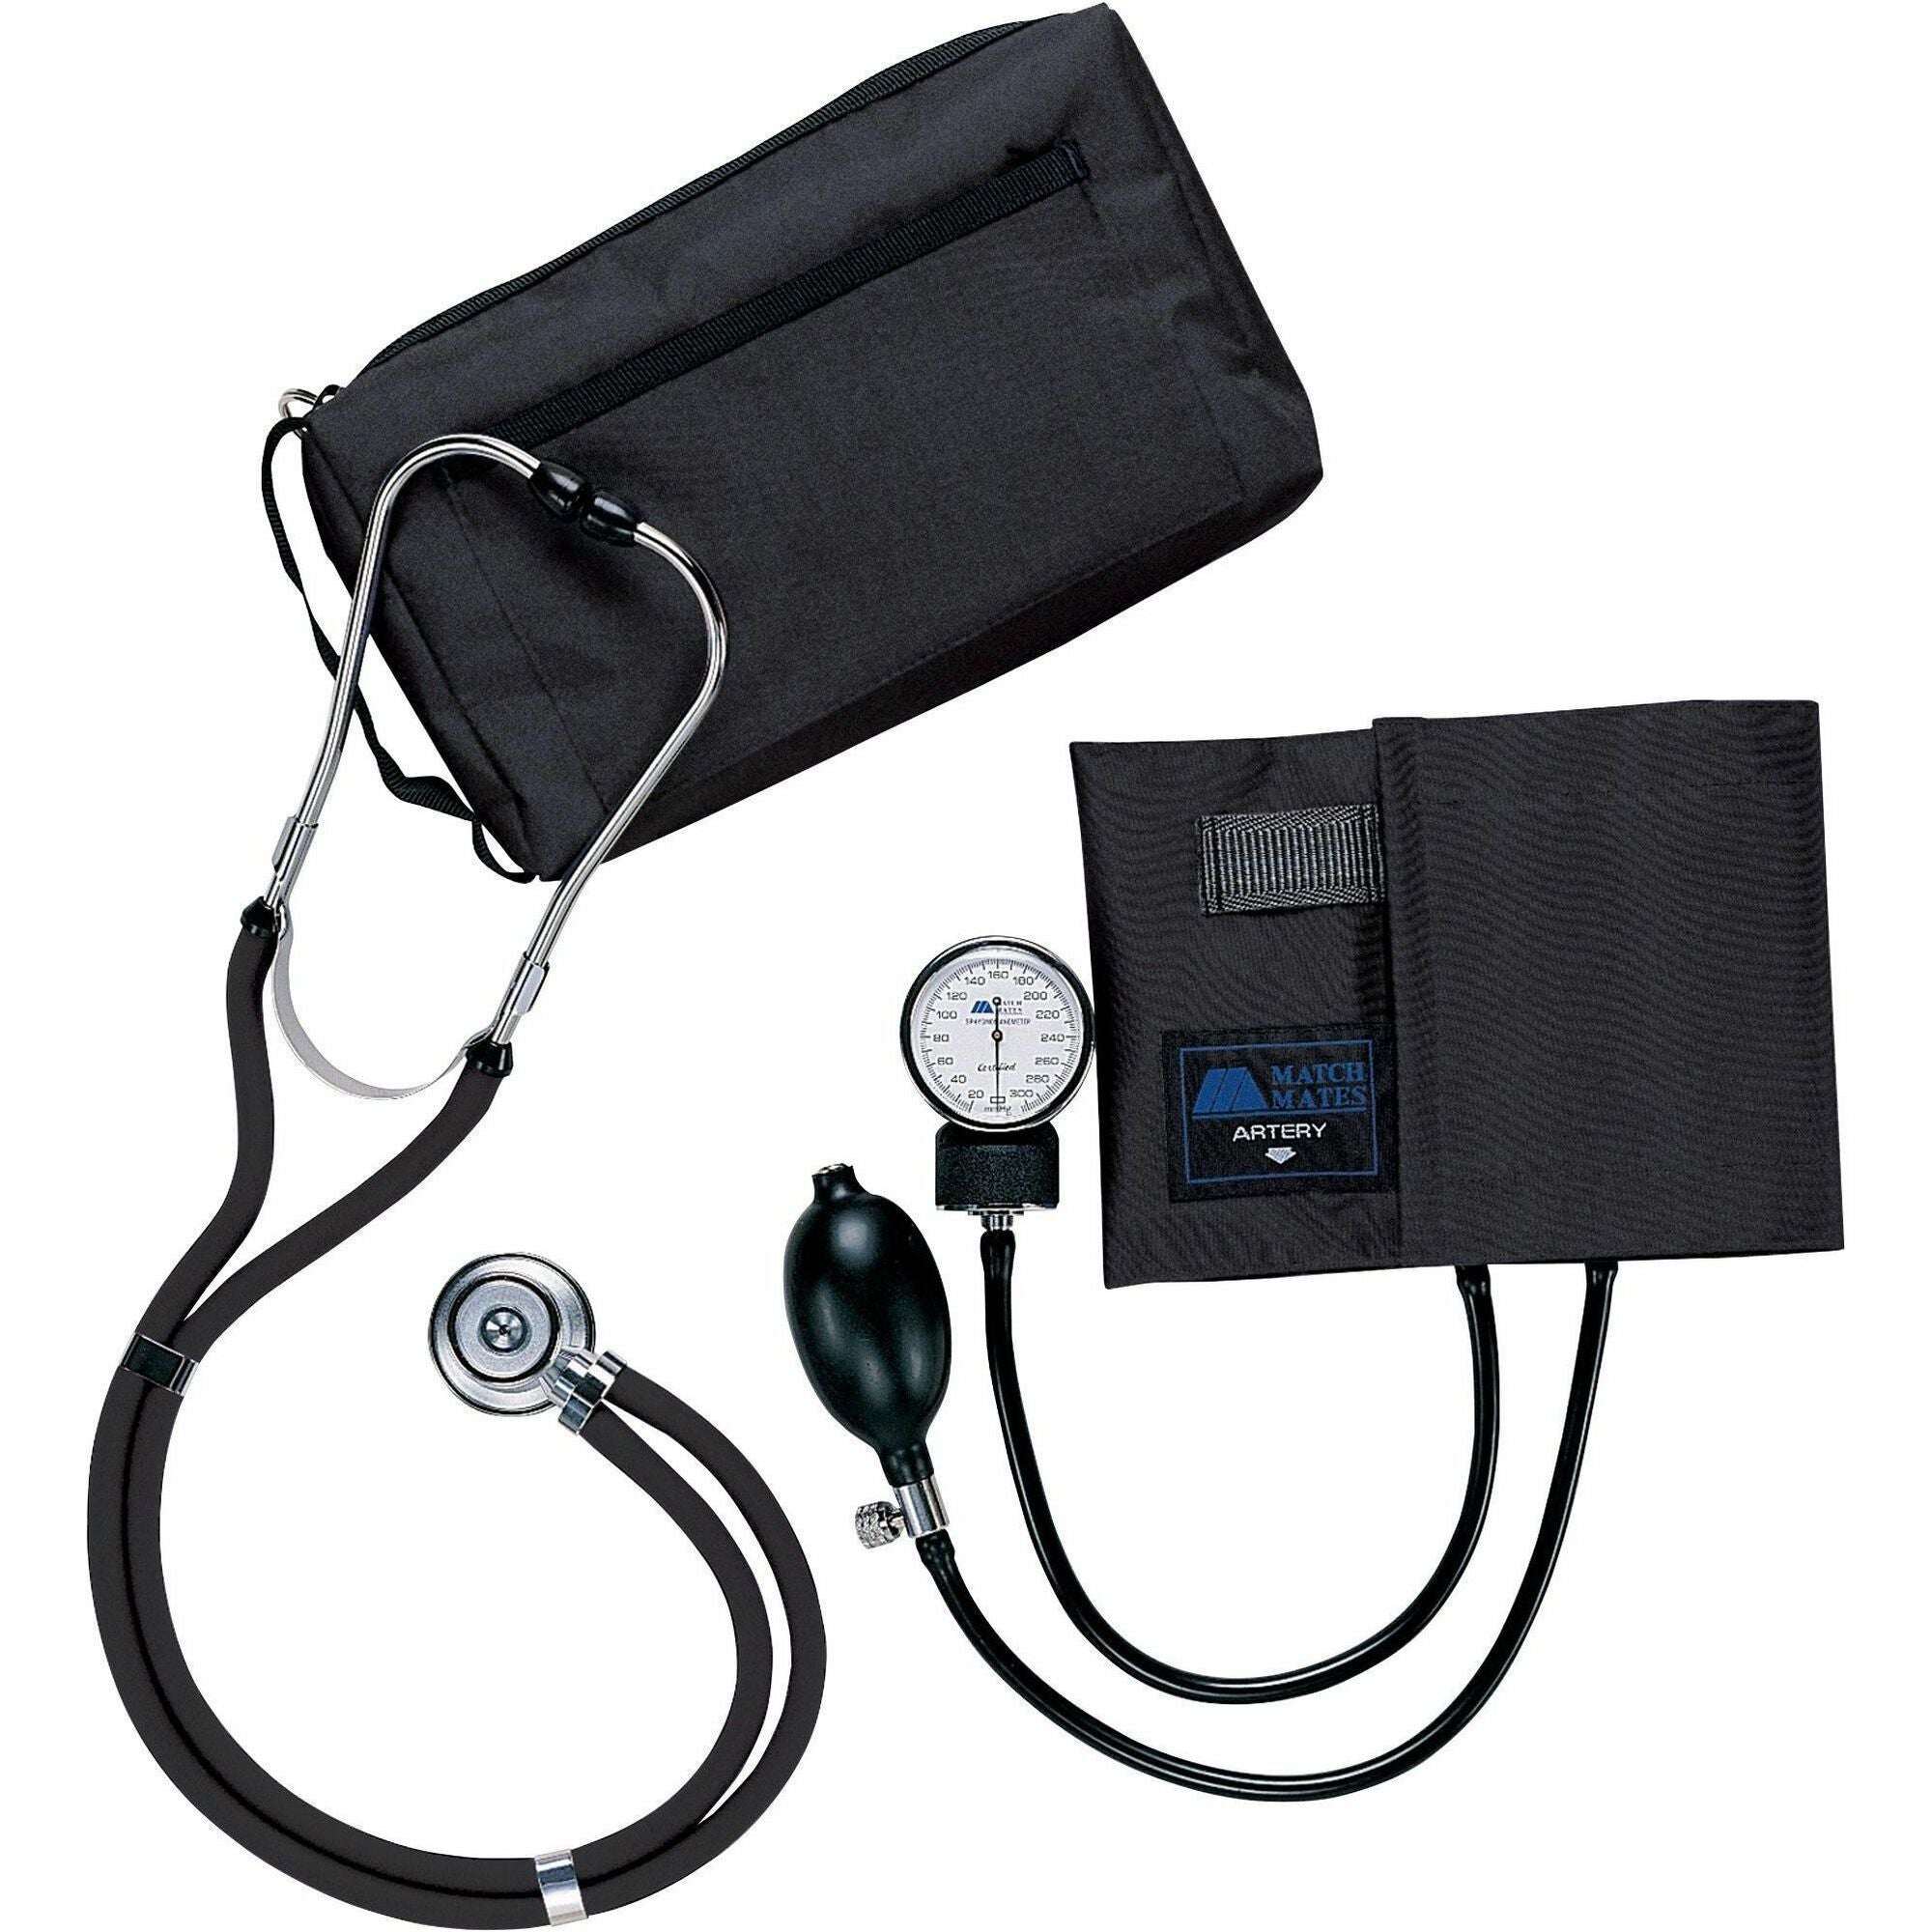 Medline Sprague Rappaport Stetho/Sphyg Combo - For Blood Pressure - Latex-free - Black - 